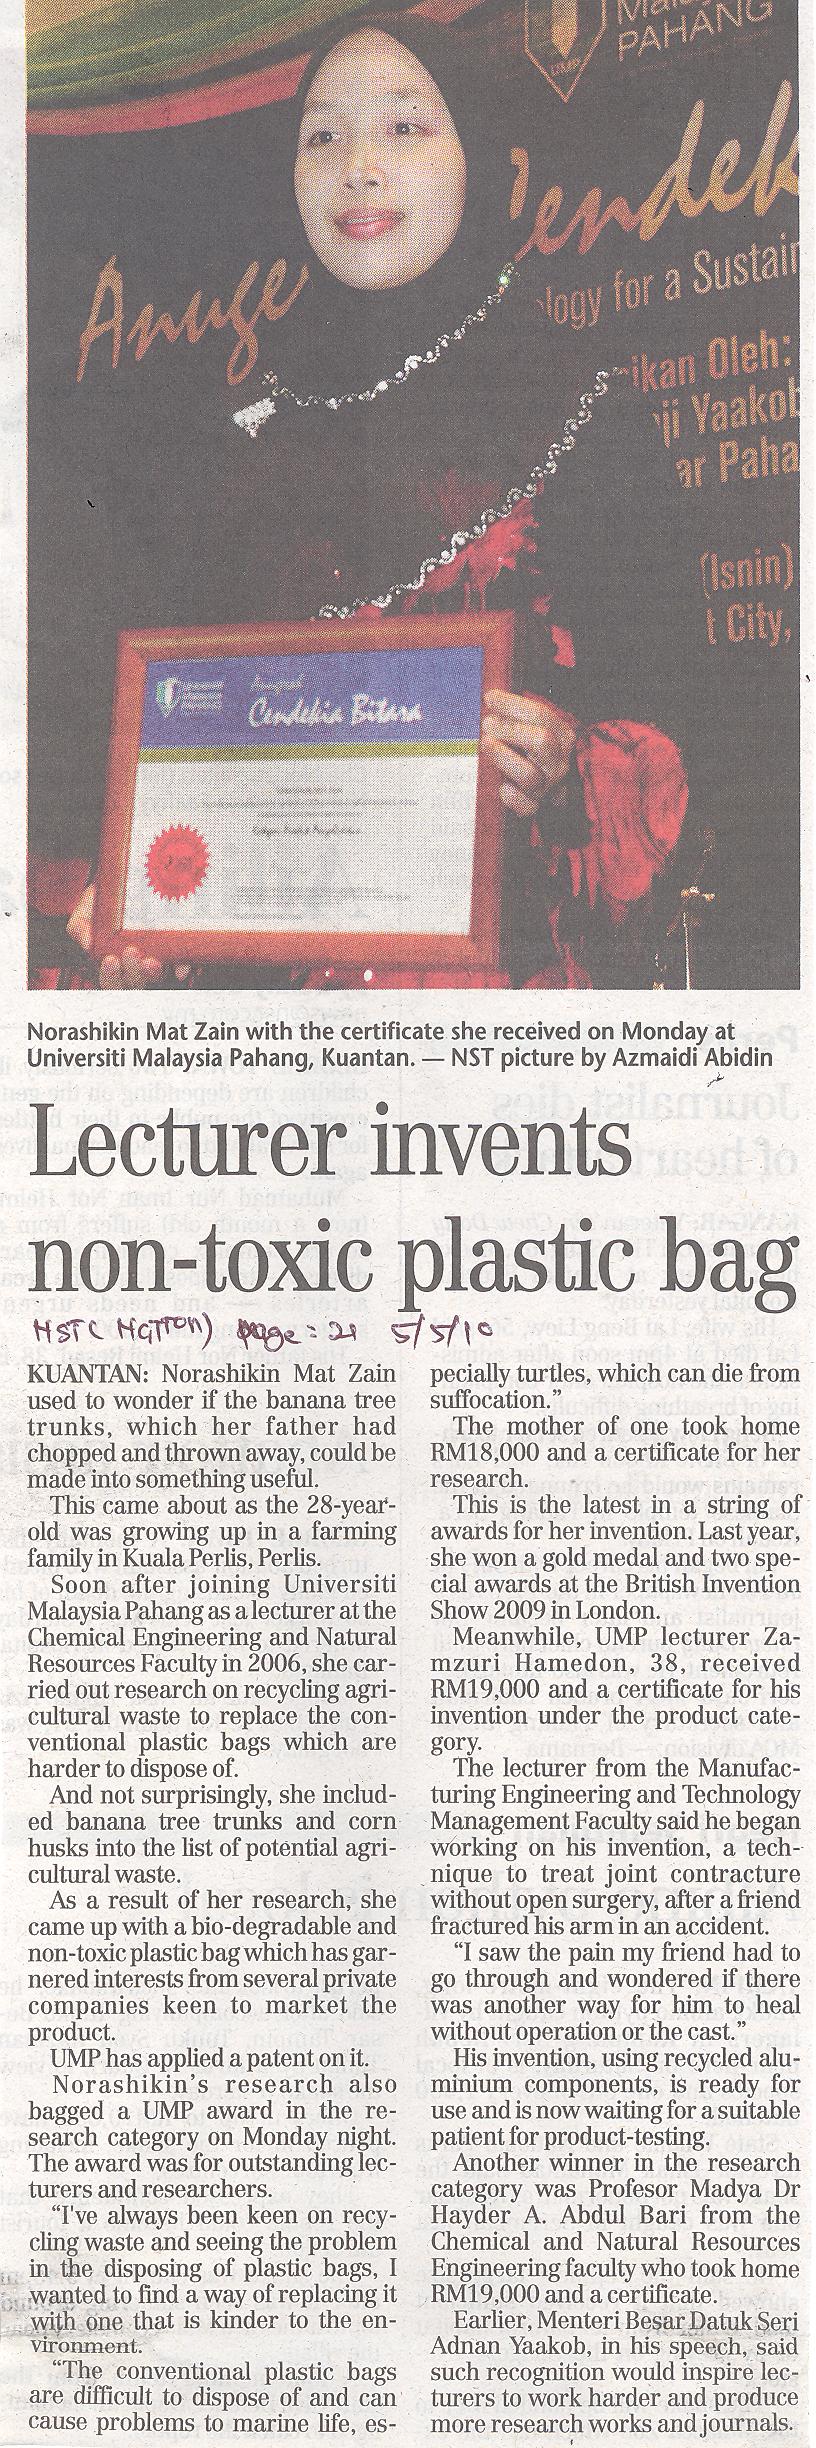 Lecturer Invent Non-Toxic Plastic Bag